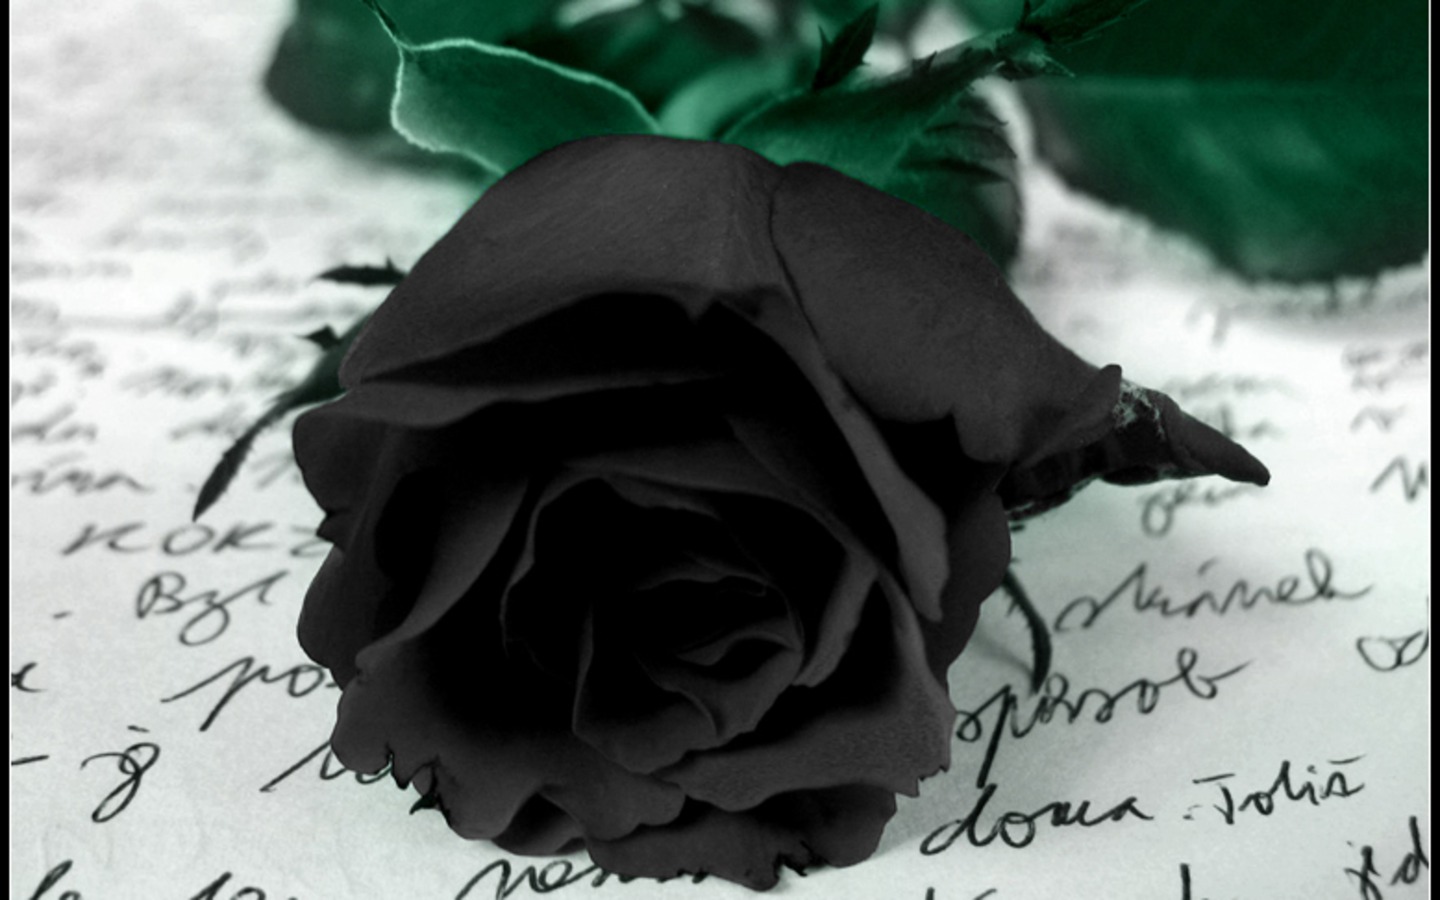 Black Rose Wallpaper HD In Flowers Imageci